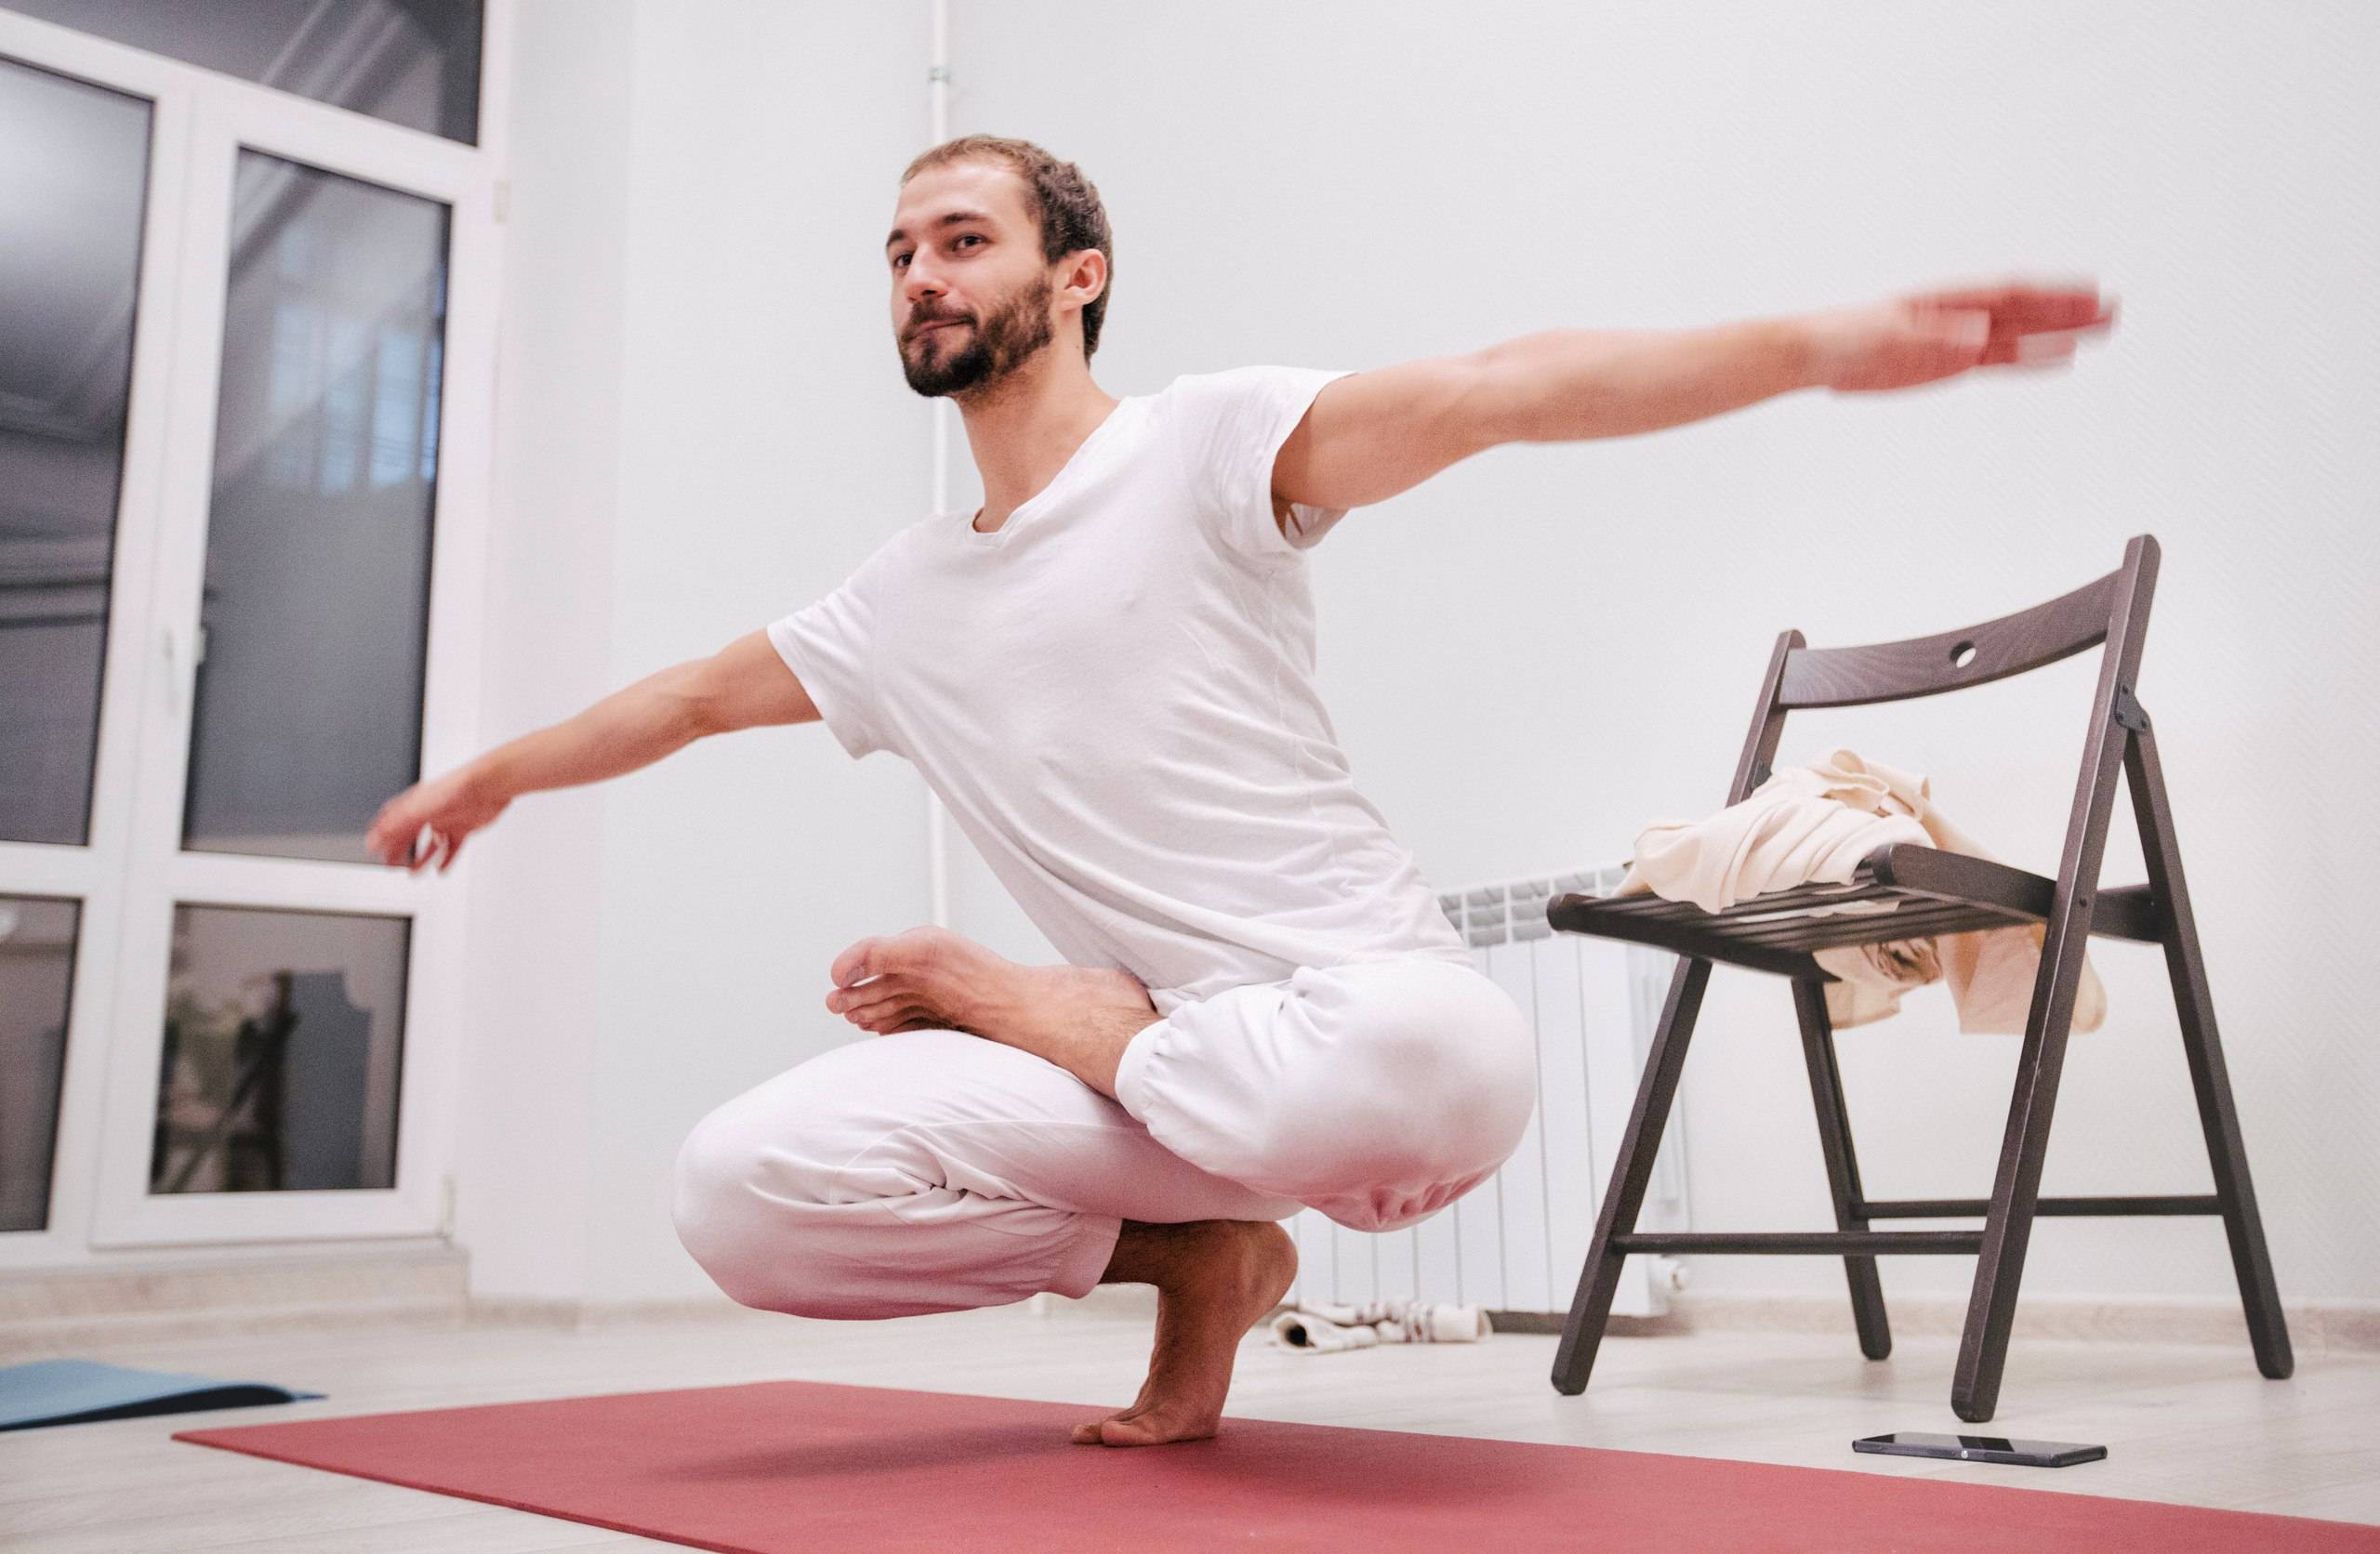 Йога для начинающих в домашних условиях - от а до я